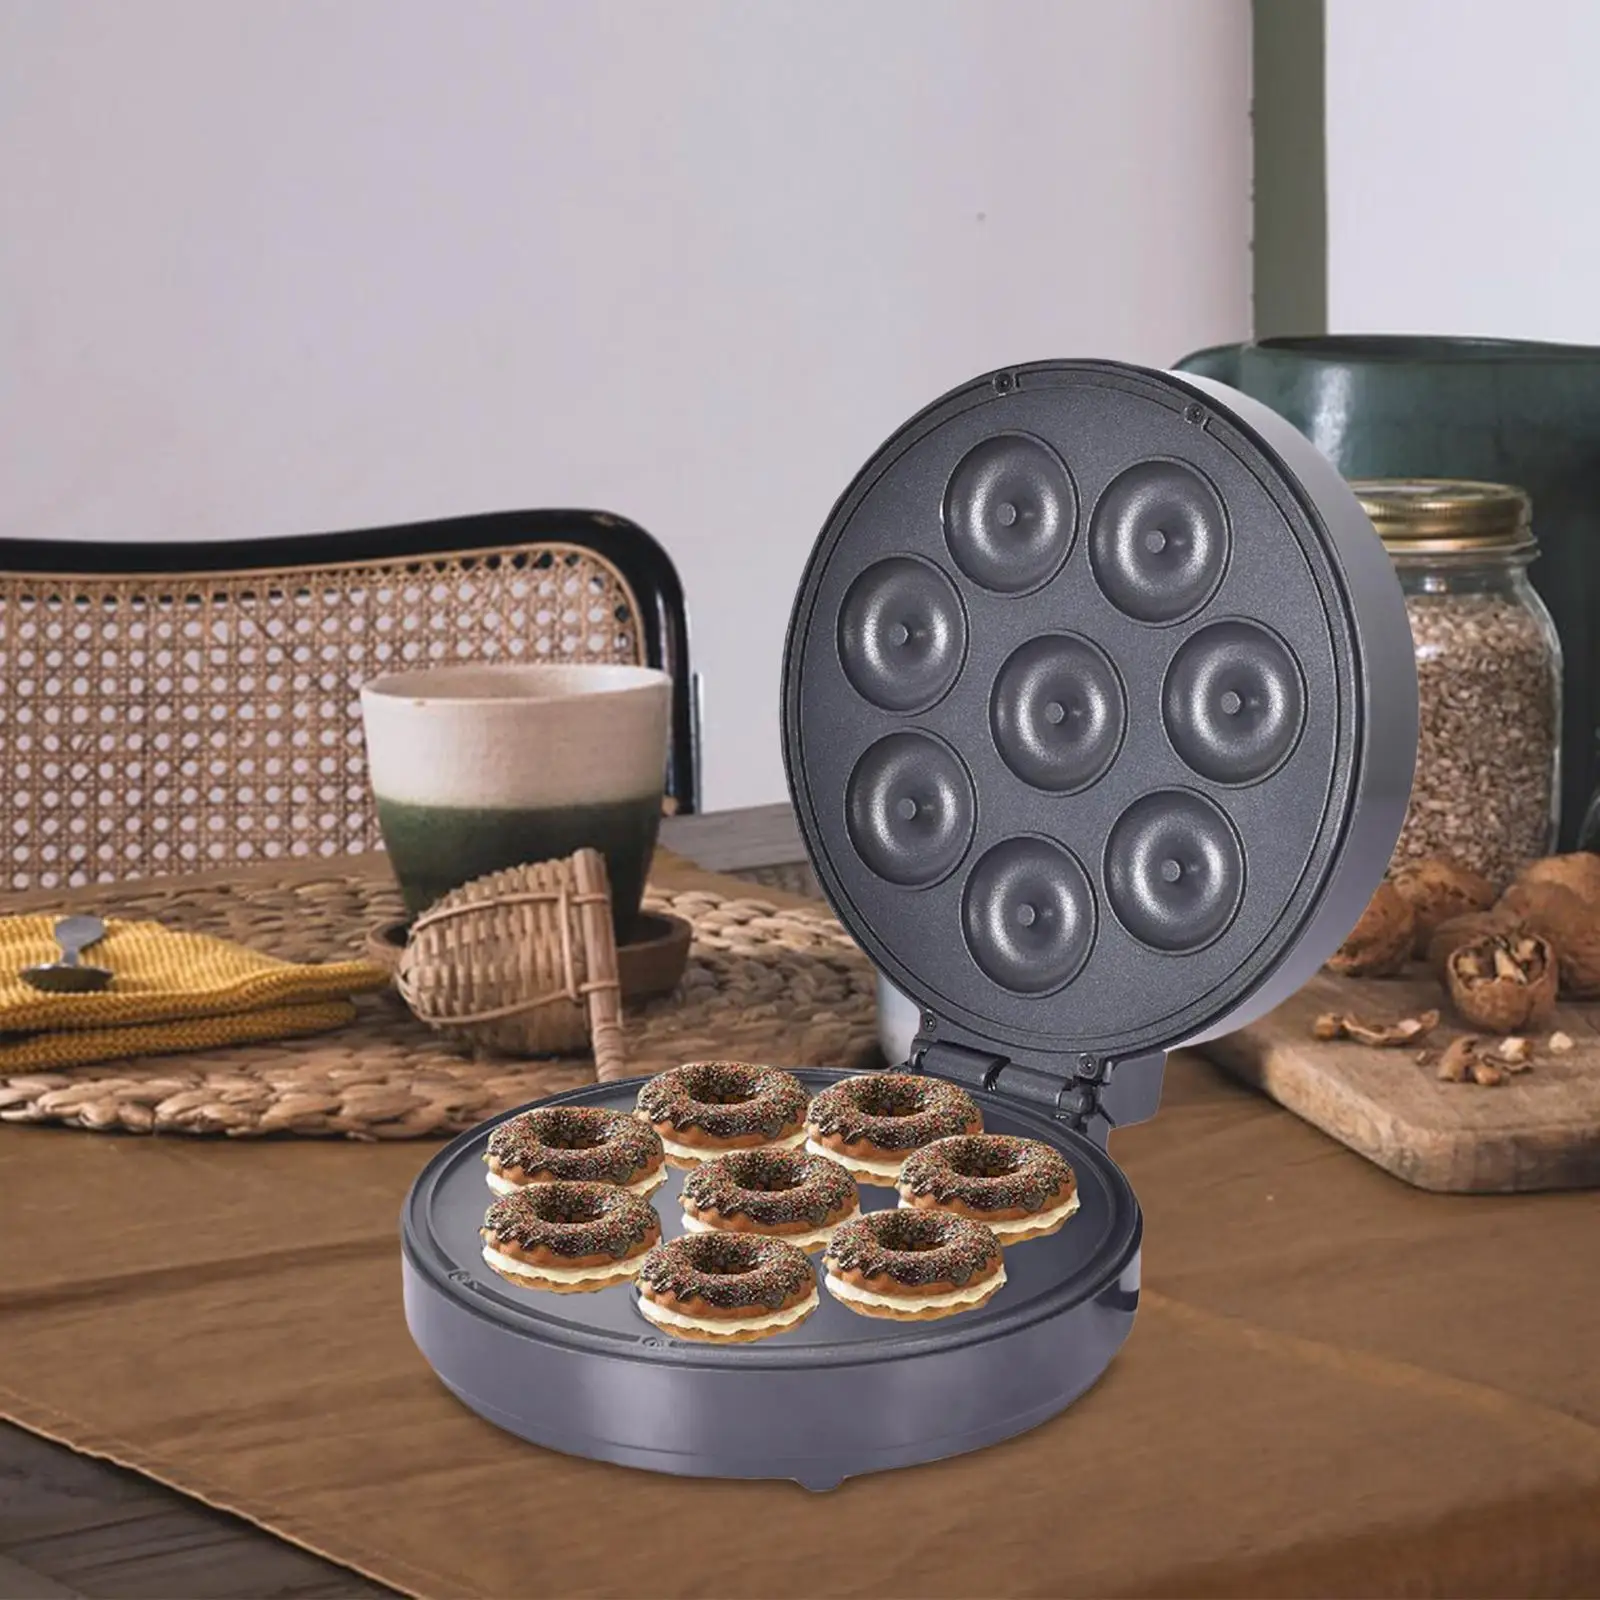 Mini Donut Maker Machine, Non Stick Portable Electric Doughnut Making Pan,  Makes 8 Donuts for Home Breakfast Snacks Dessert Cakes Muffins, 1400W